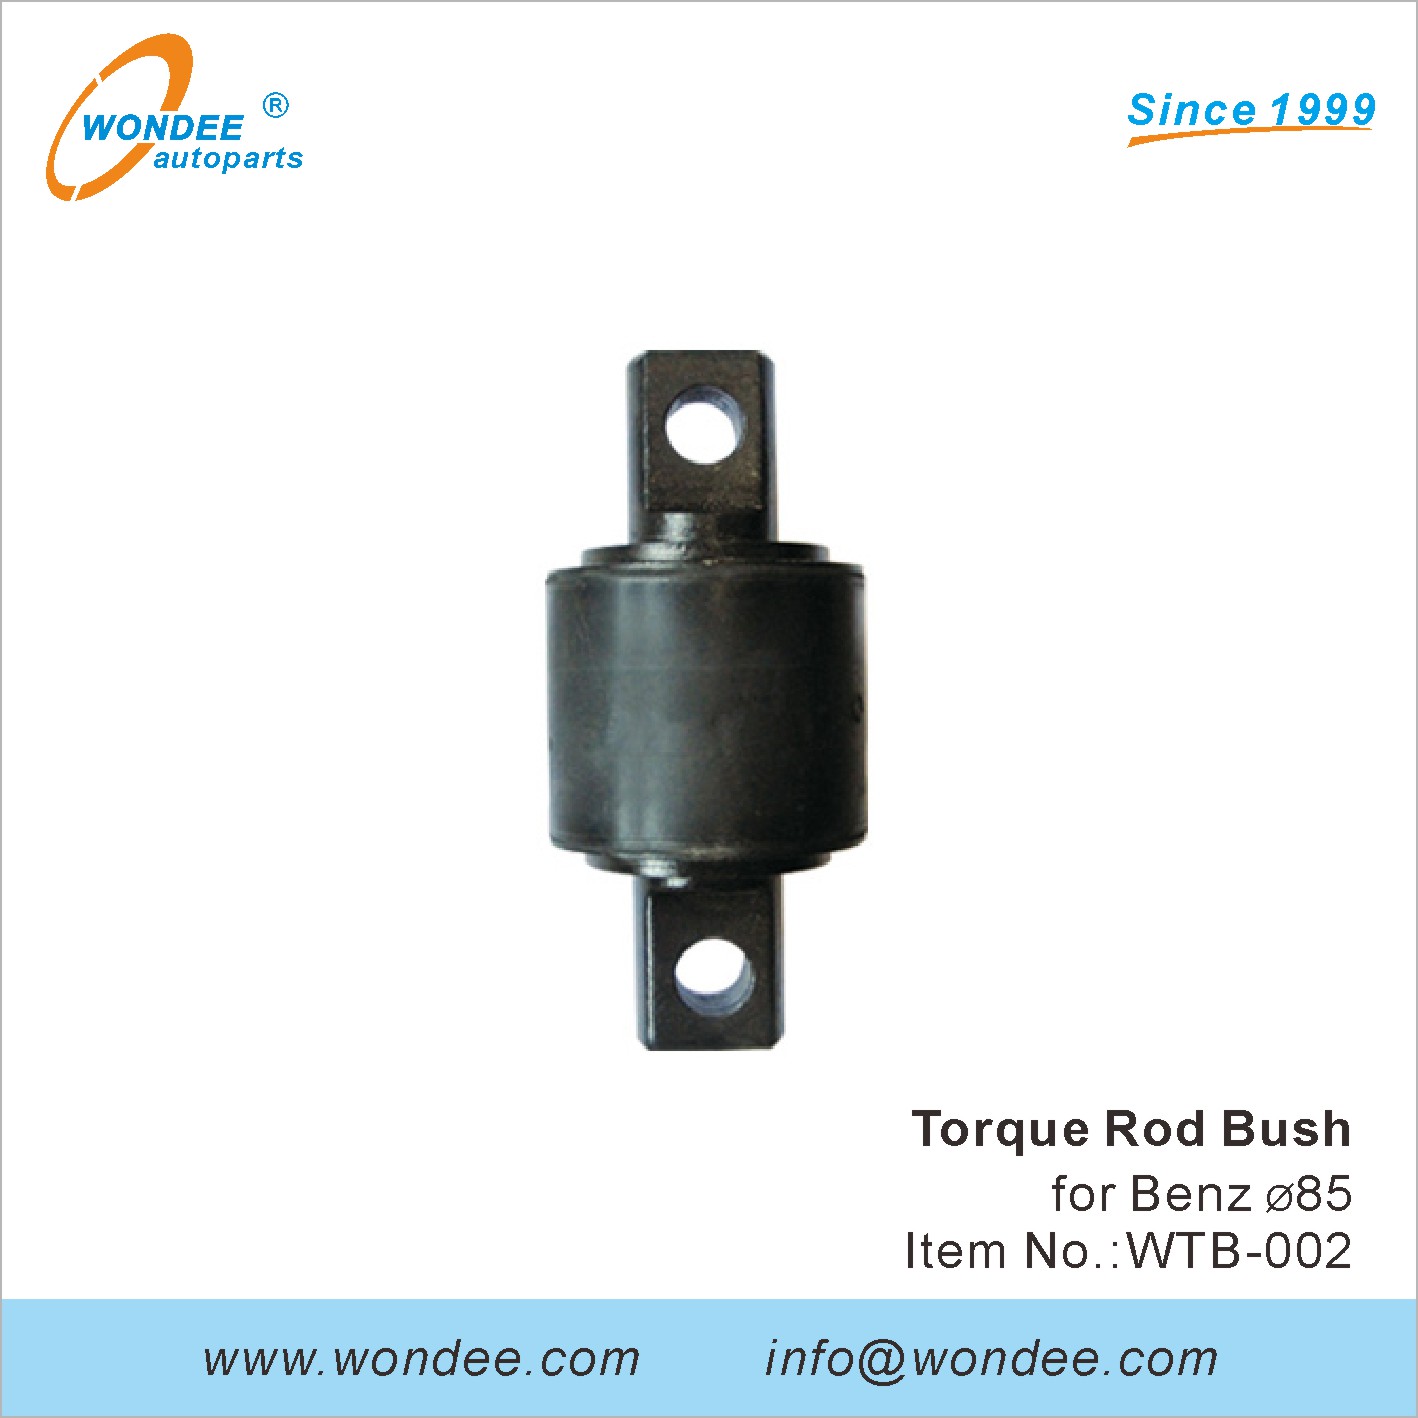 WONDEE torque rod bush (2)